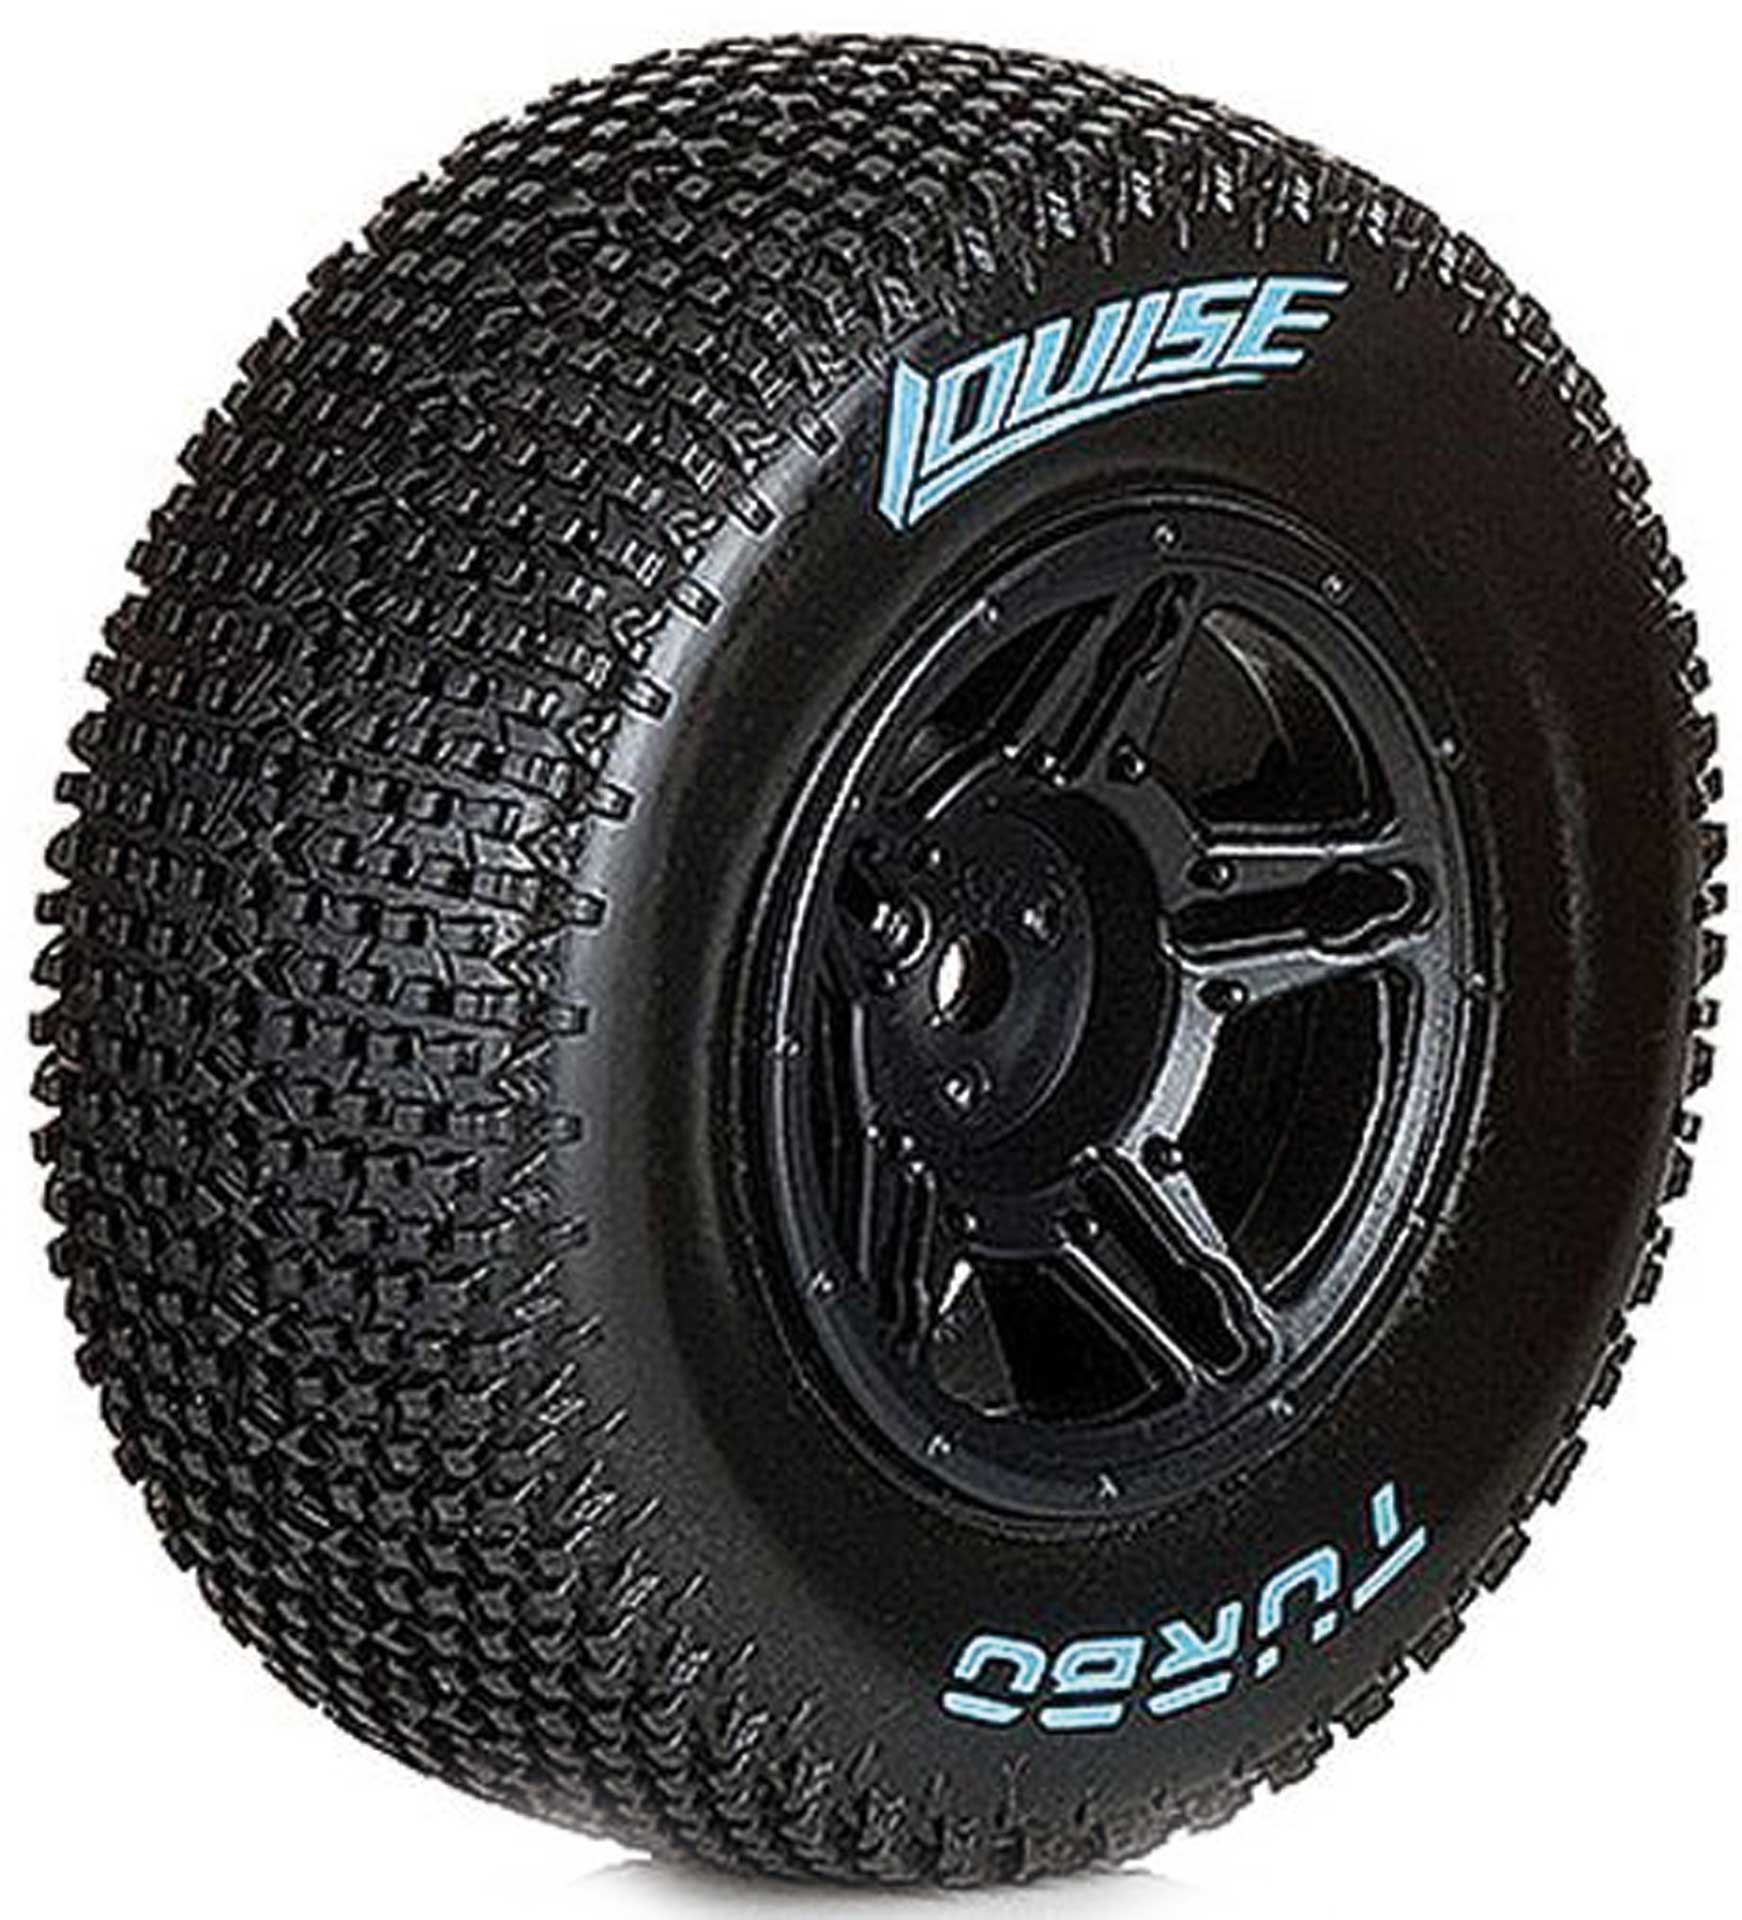 LOUISE SC-Turbo Reifen soft auf 2.2/3.0 Felge schwarz 12mm(2)